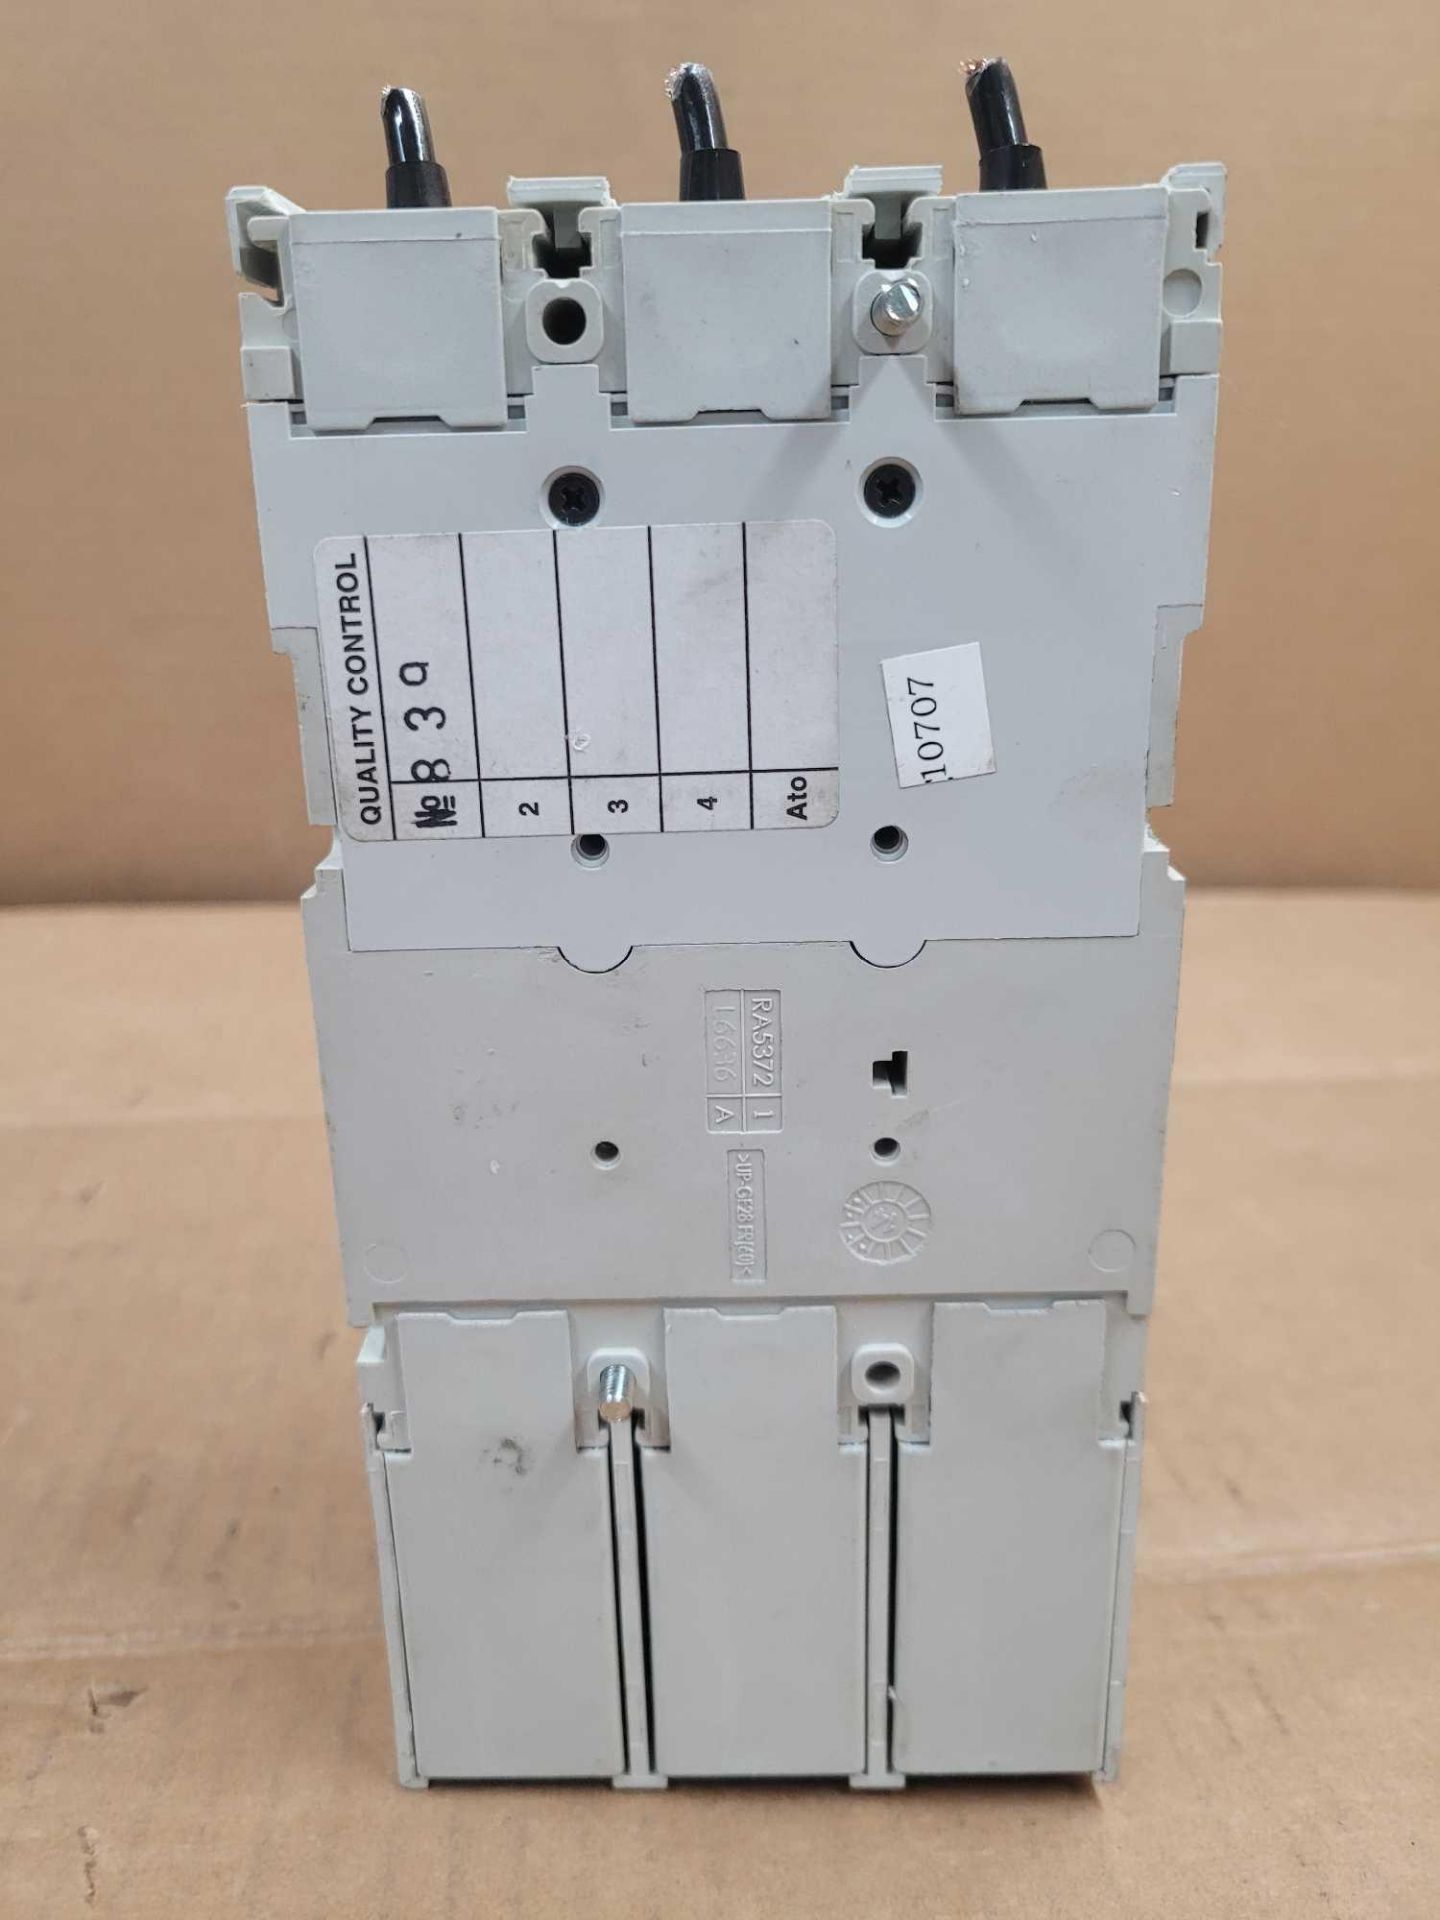 LOT OF 2 ALLEN BRADLEY 140G-H6C3-C25-FB / Series A 25 Amp Circuit Breaker  /  Lot Weight: 8.4 lbs - Image 5 of 9